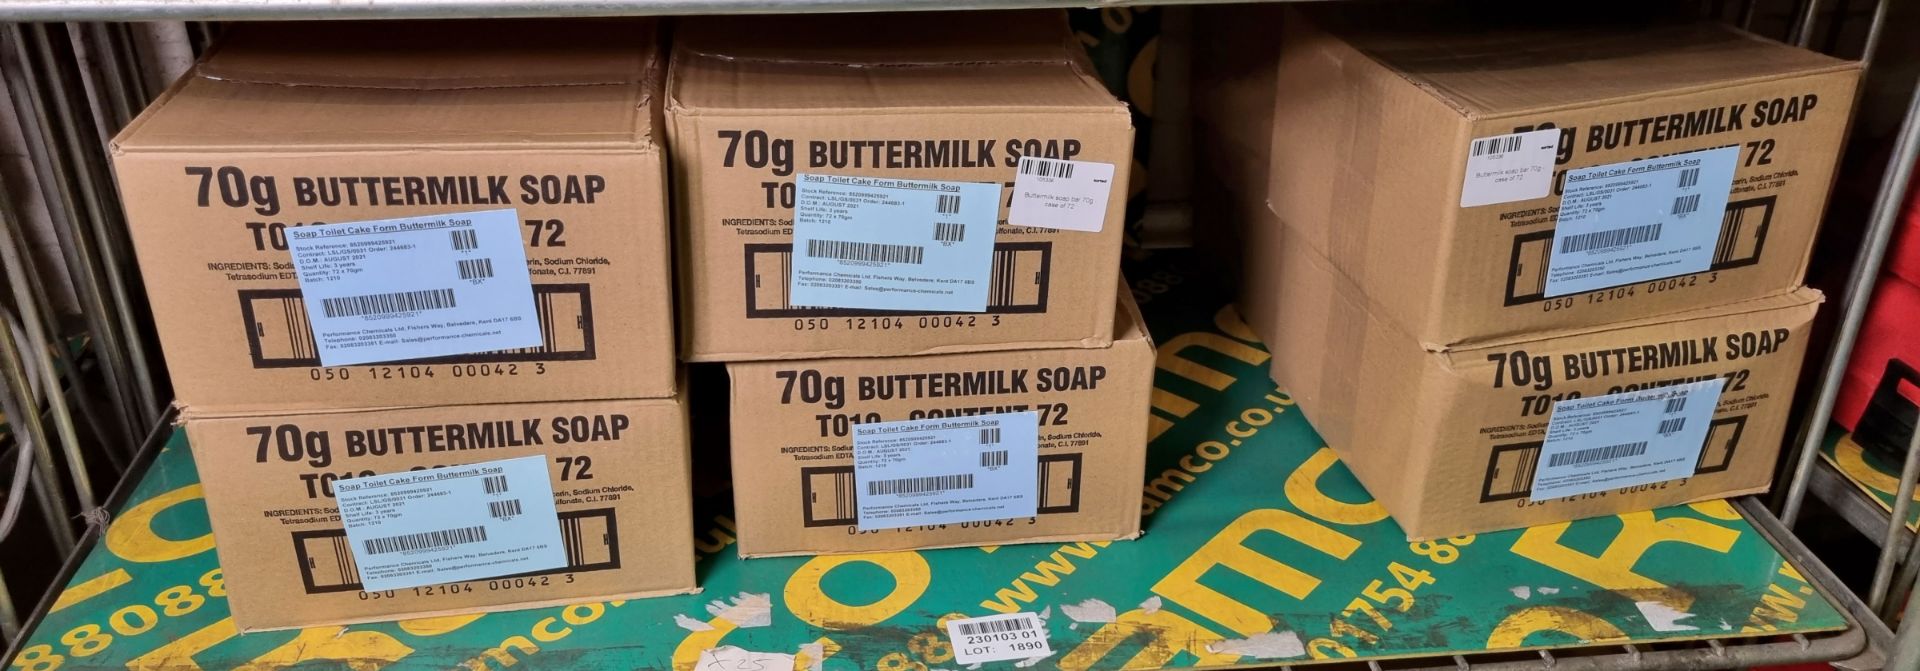 12x boxes of Buttermilk soap bar 70g - 72 units per box